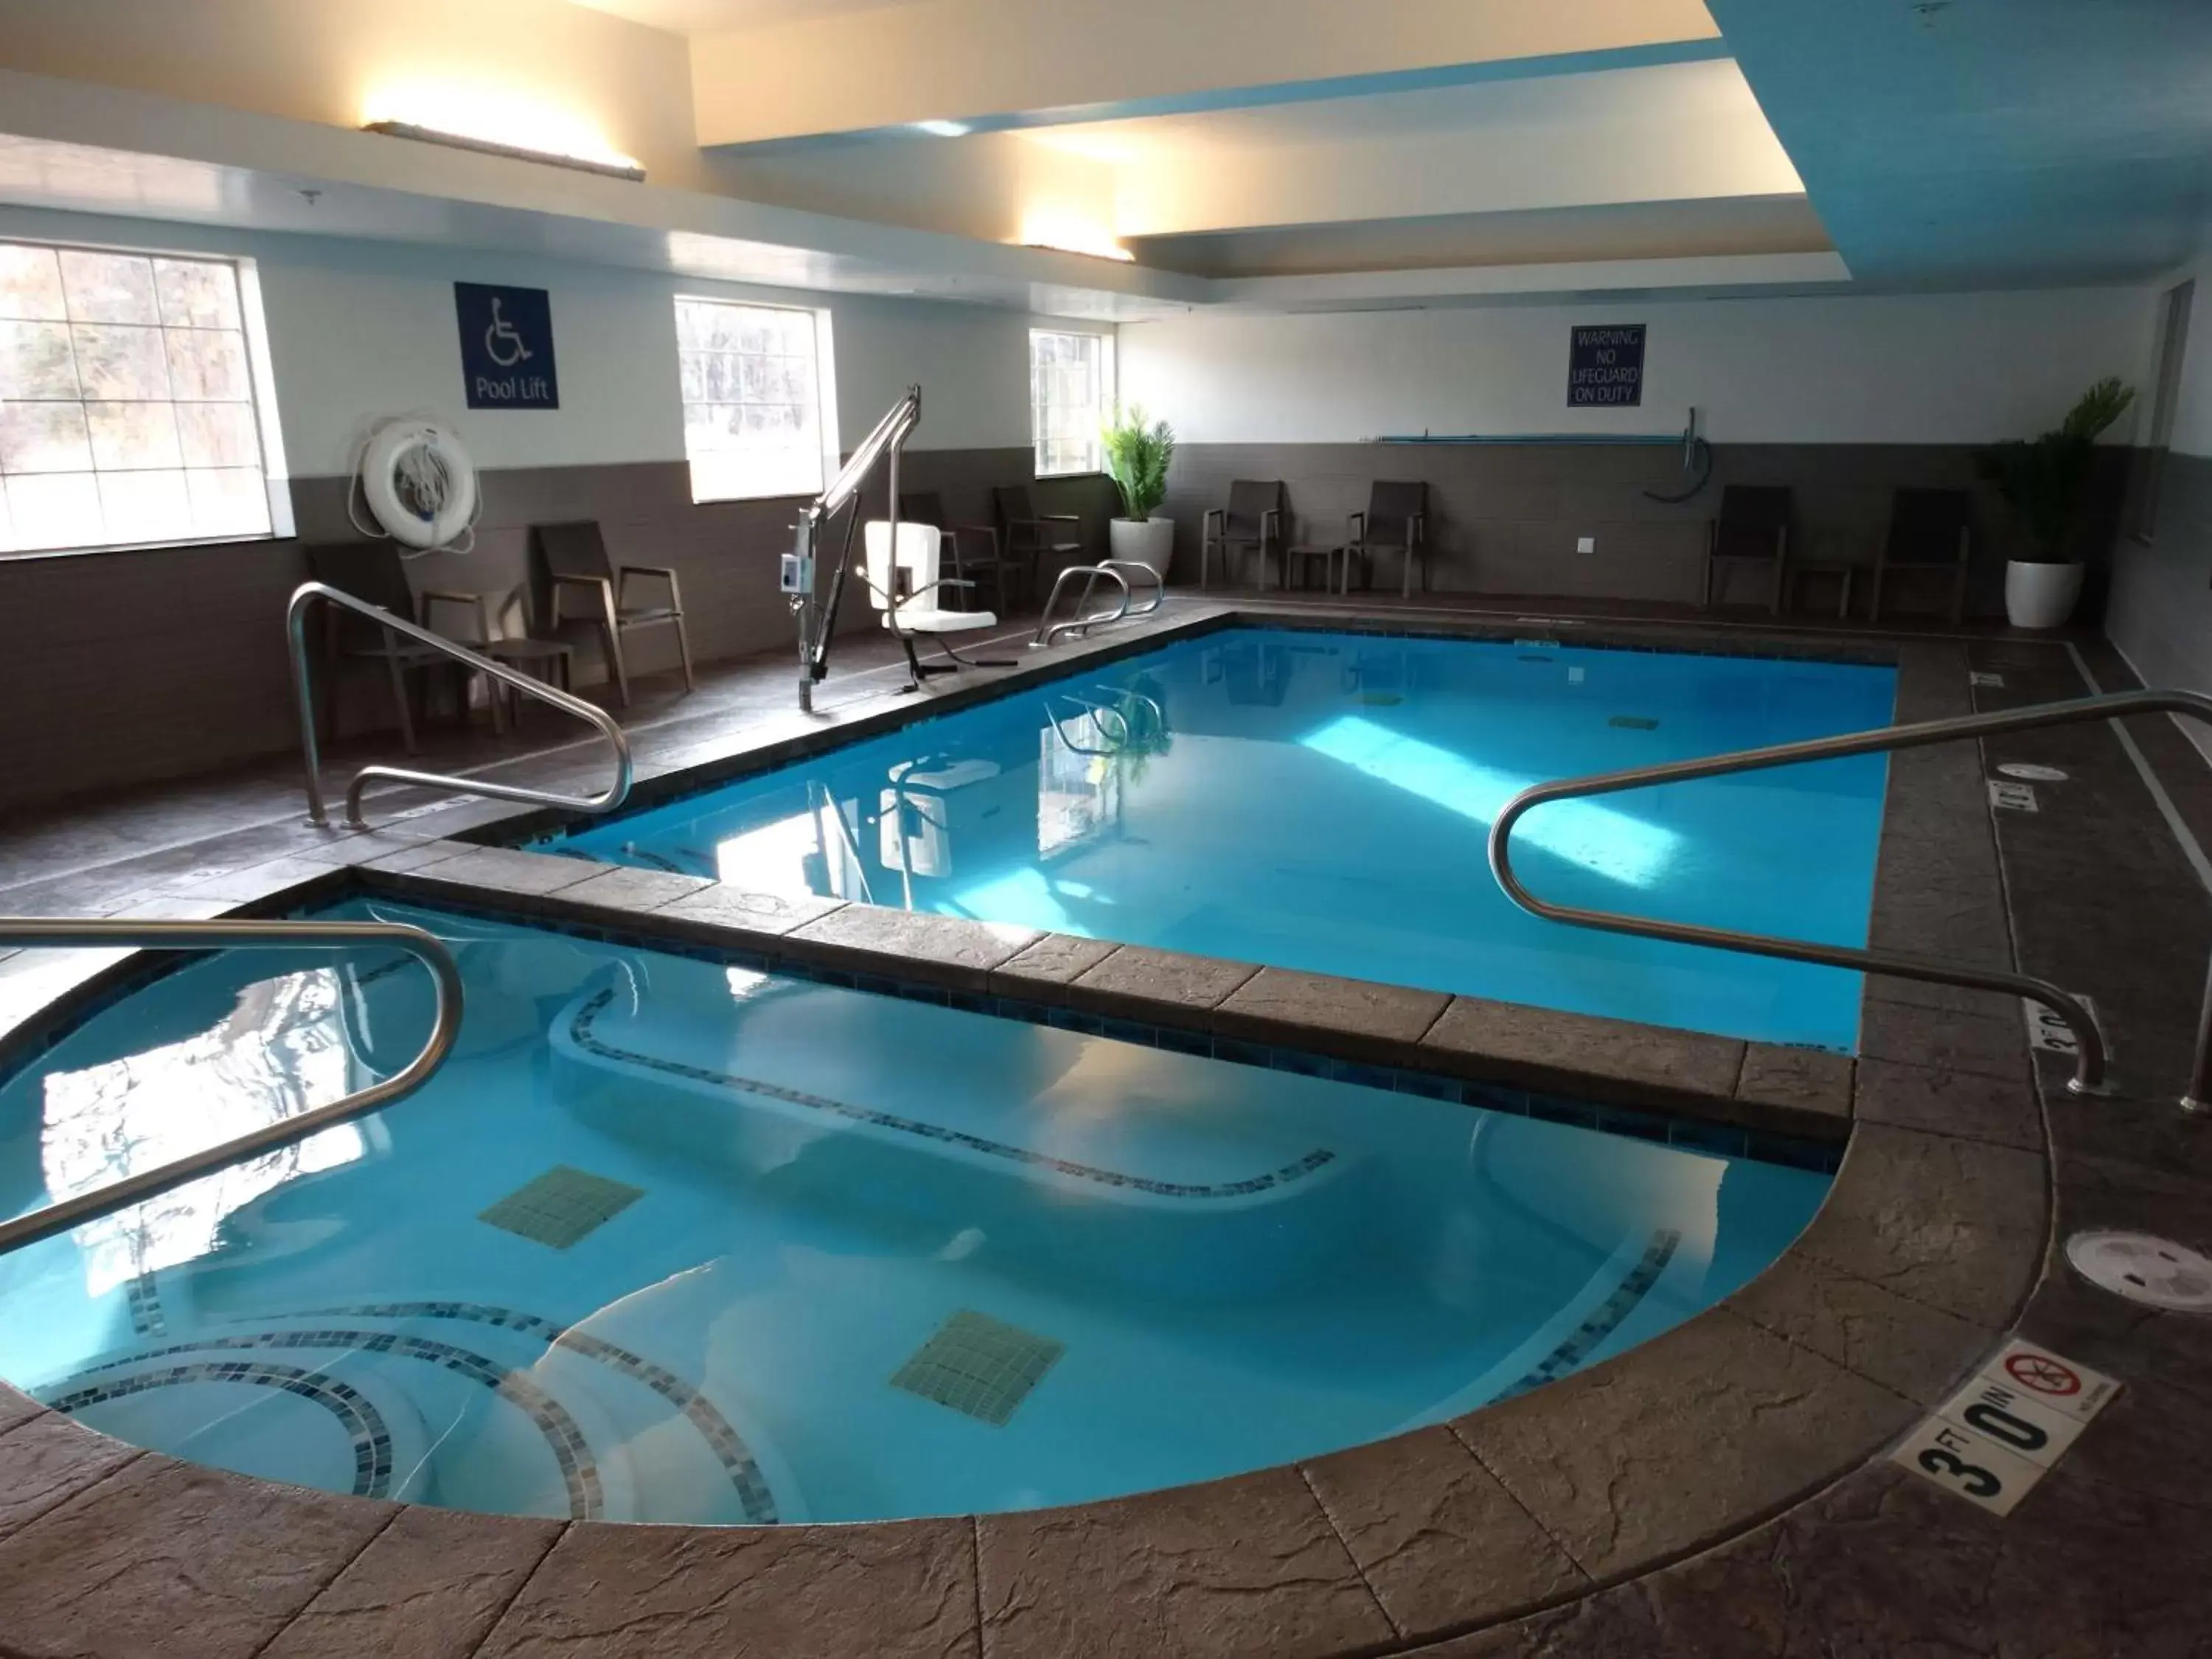 On site, Swimming Pool in Best Western Duchesne Inn